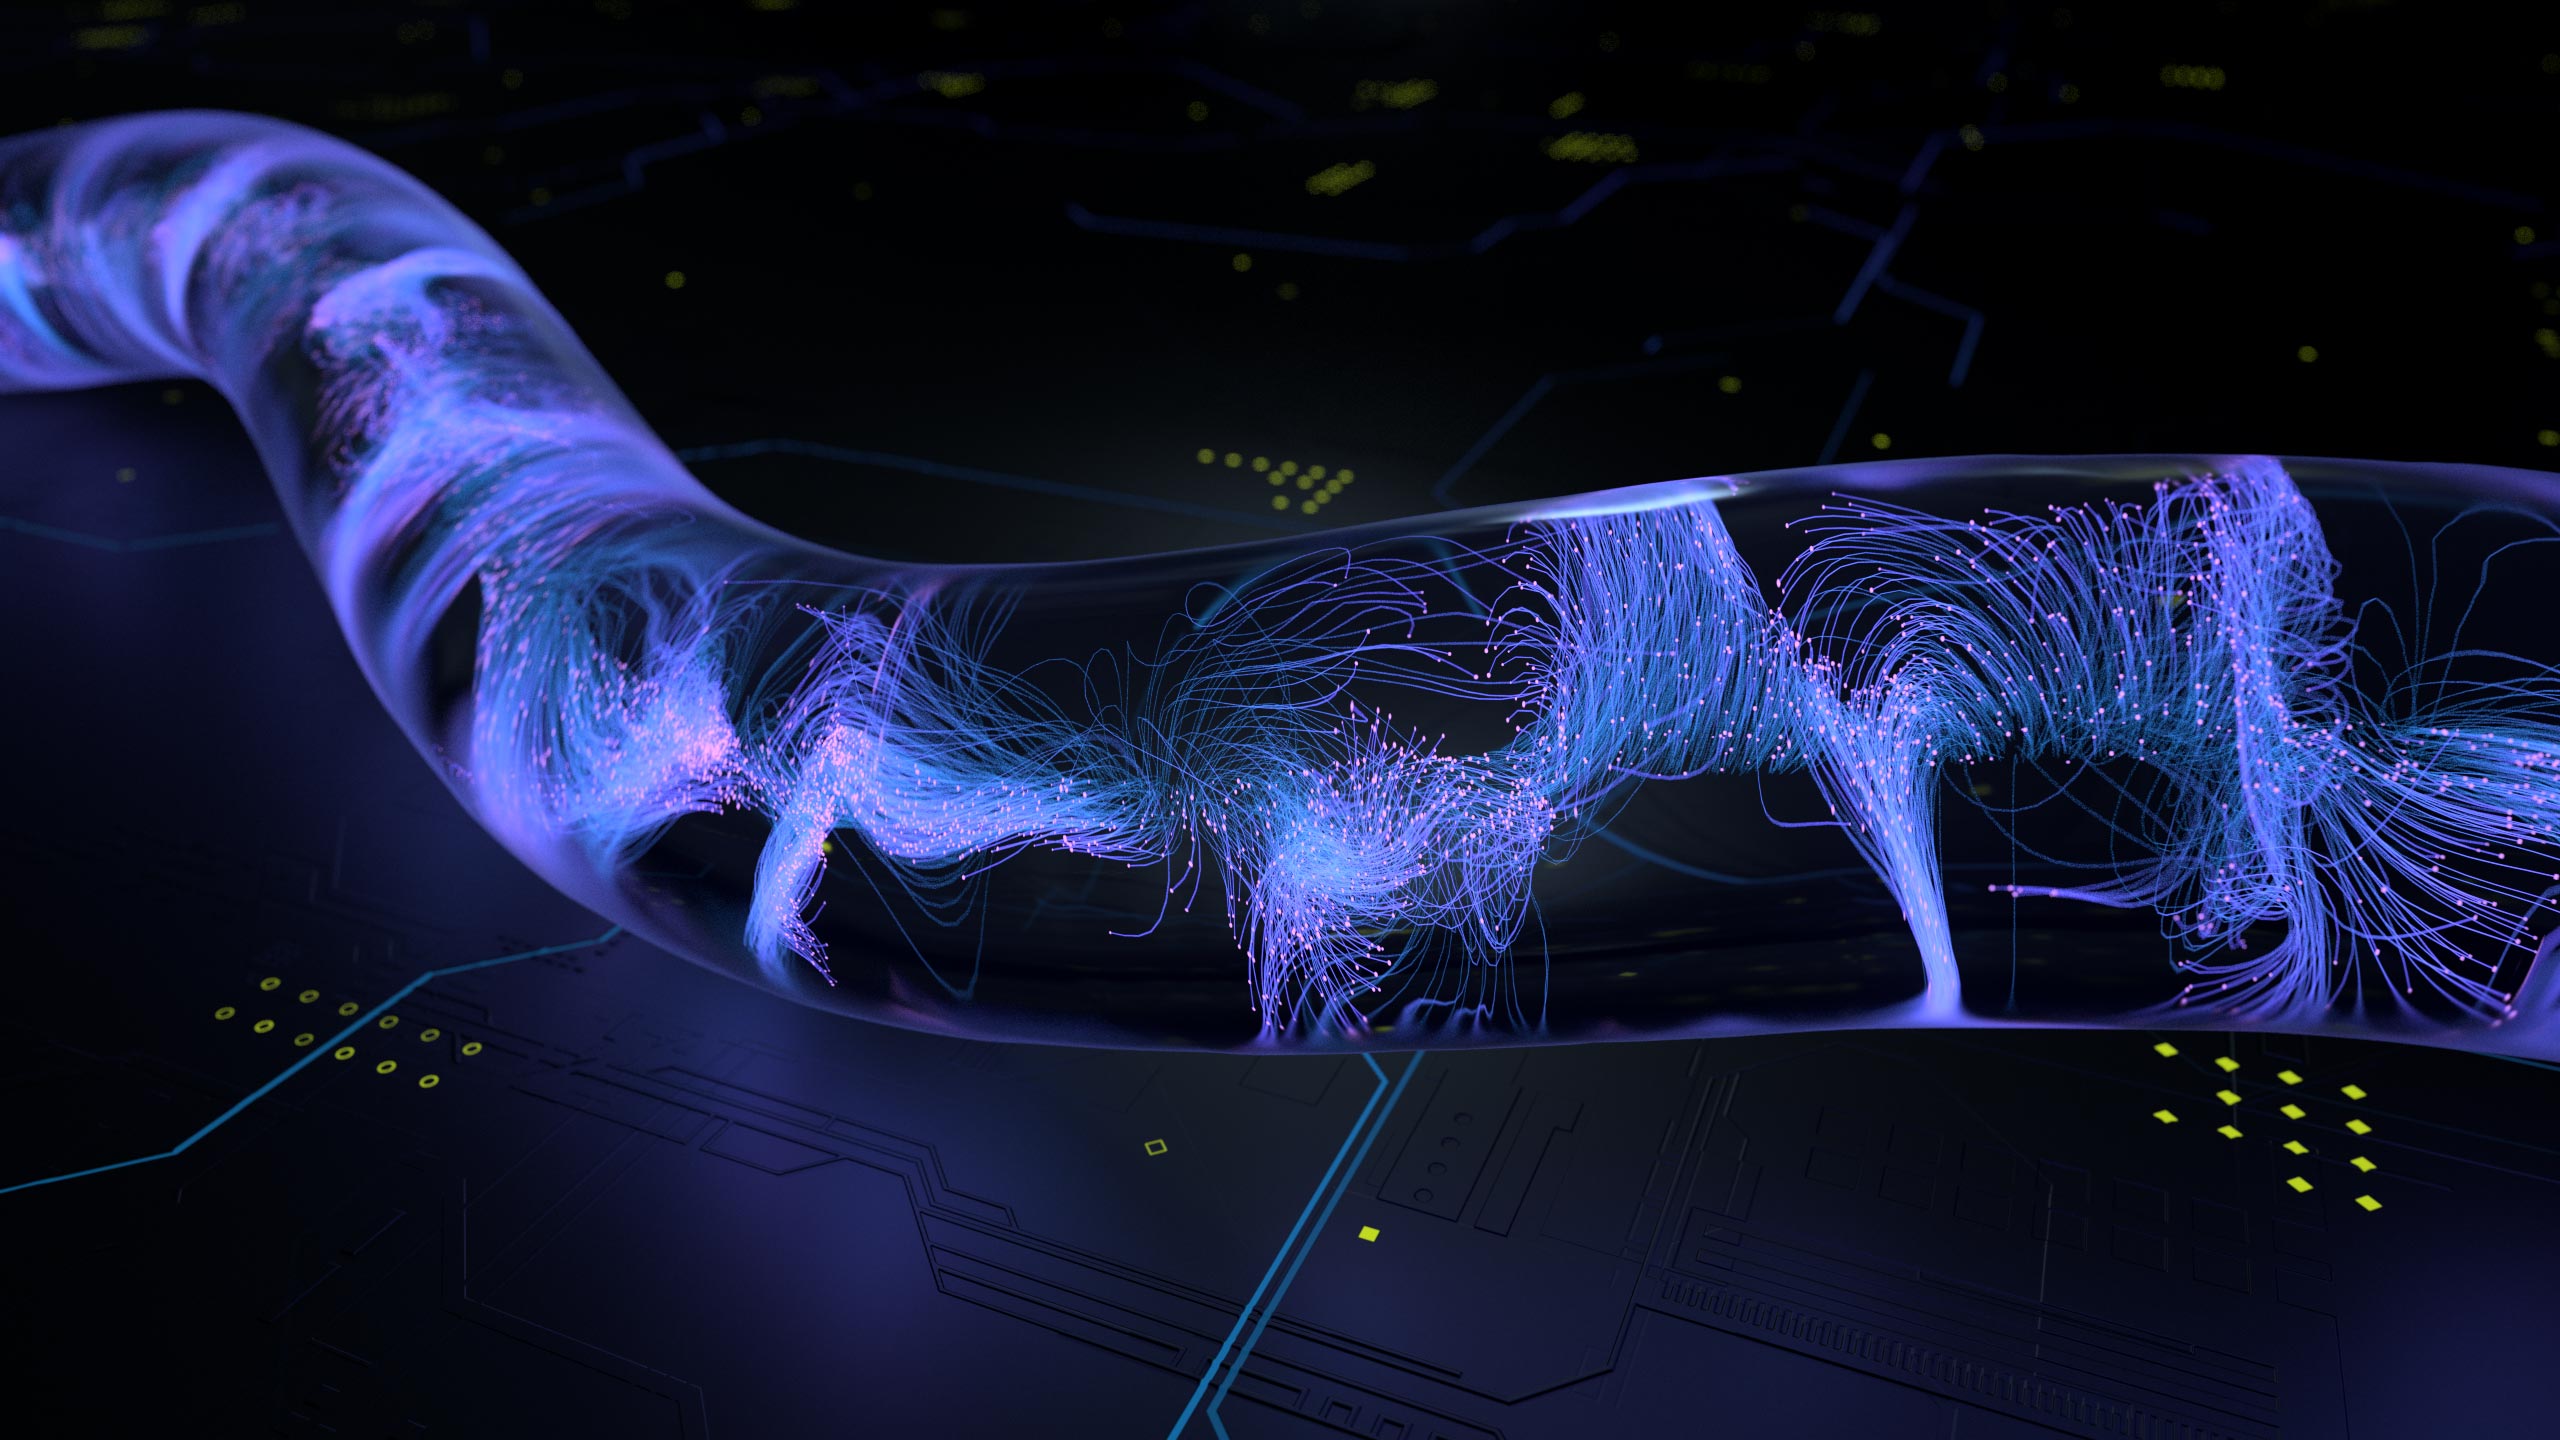 3D art: a glass tube filled with swirling purple lights, like fiber-optics.